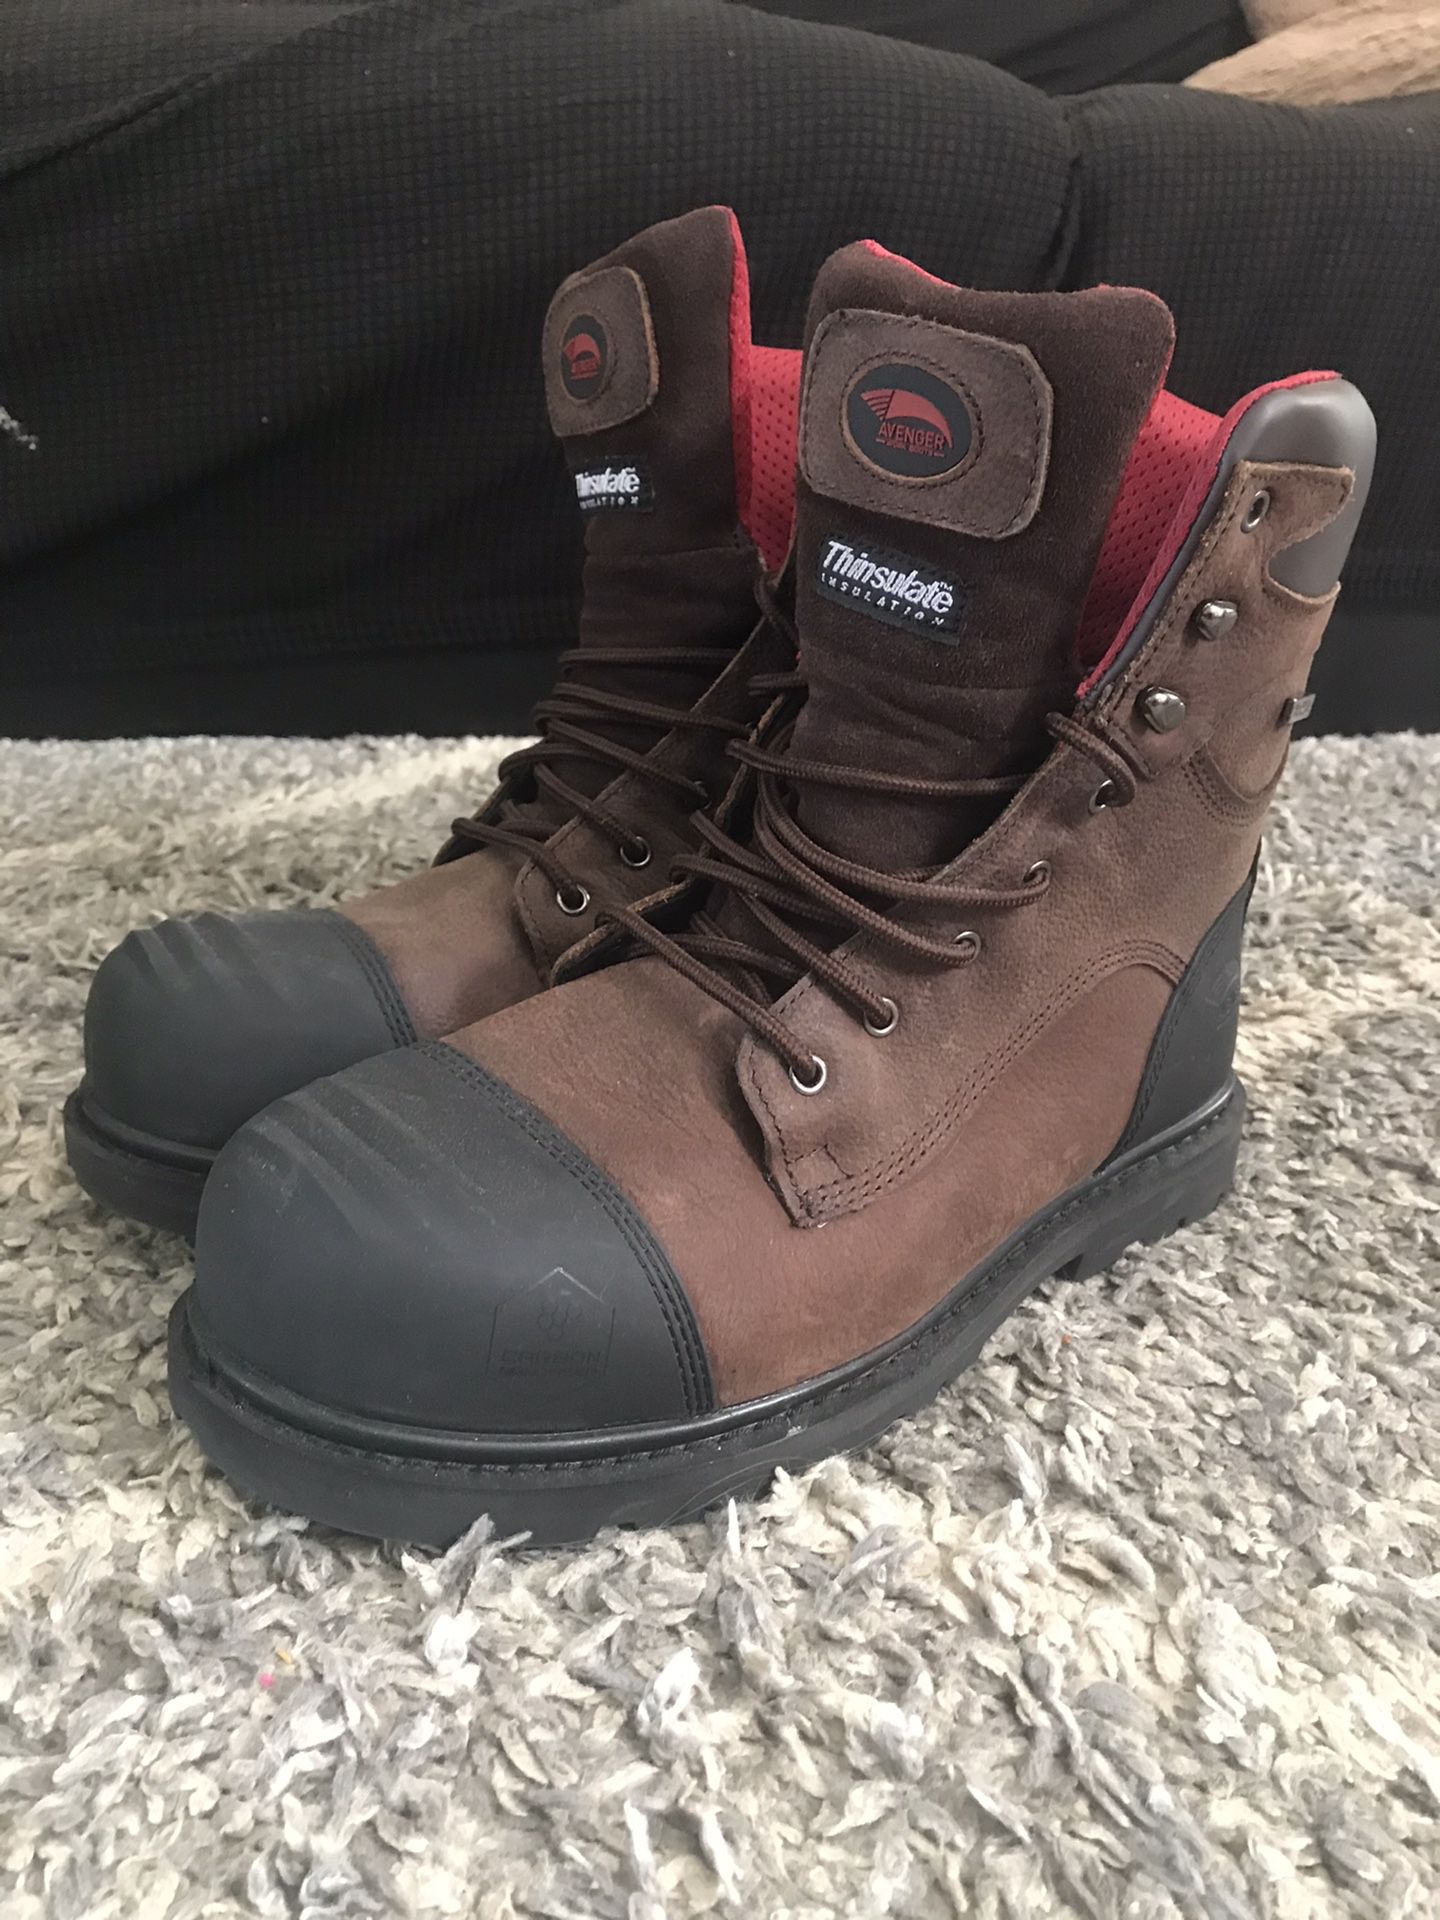 Avenger insulated work boots